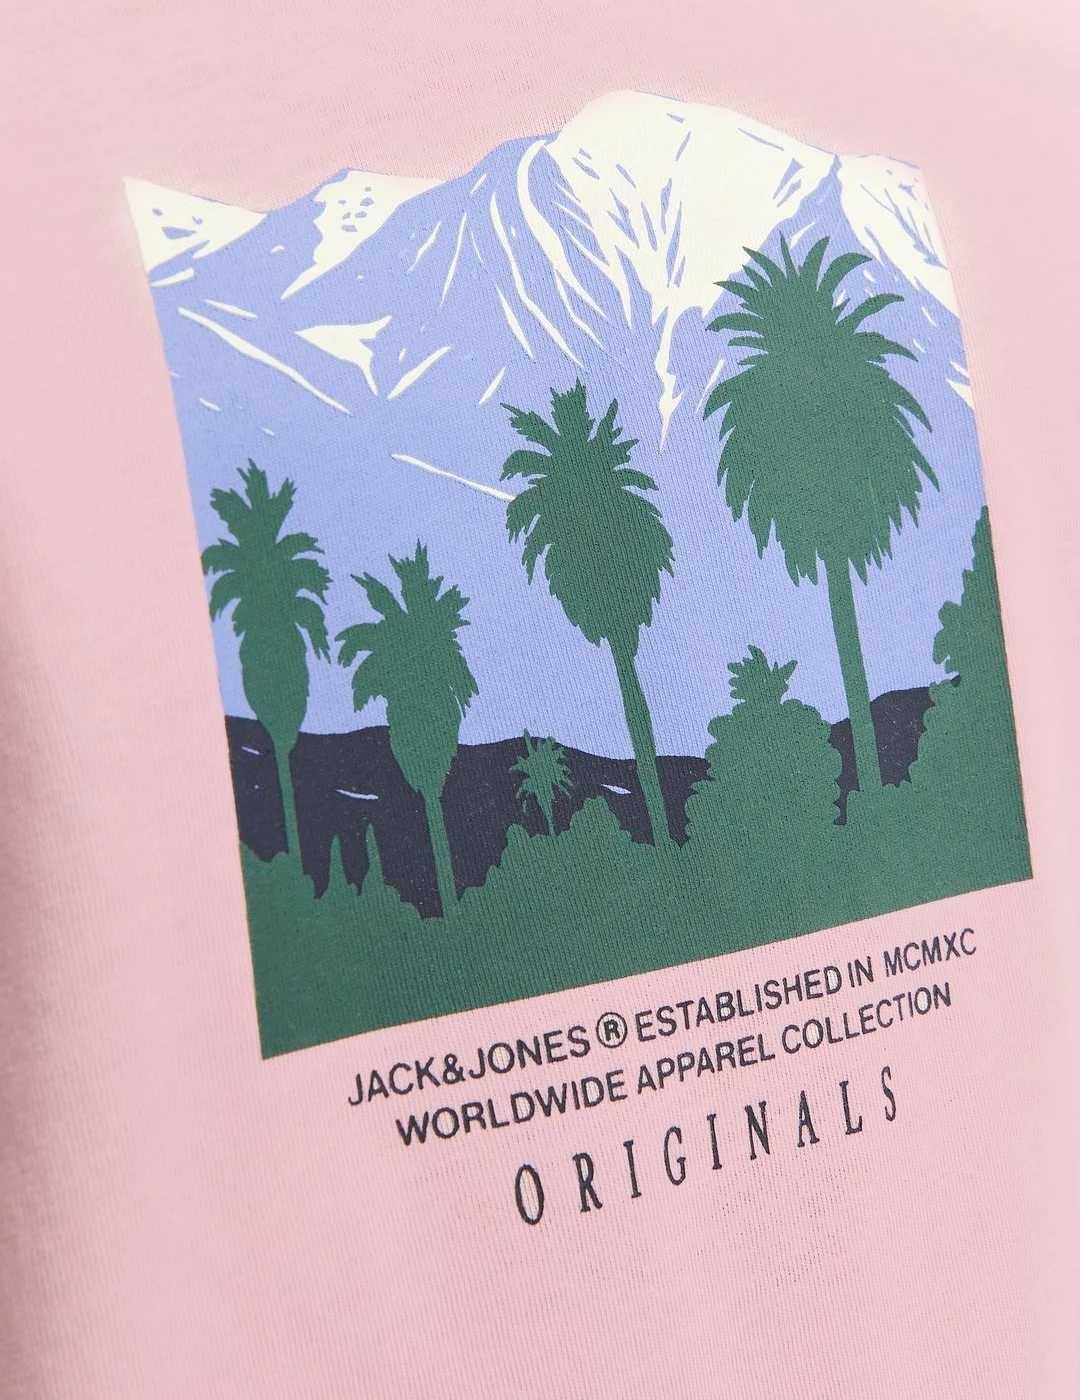 Camiseta Jack&Jones Lucca rosa manga corta para hombre